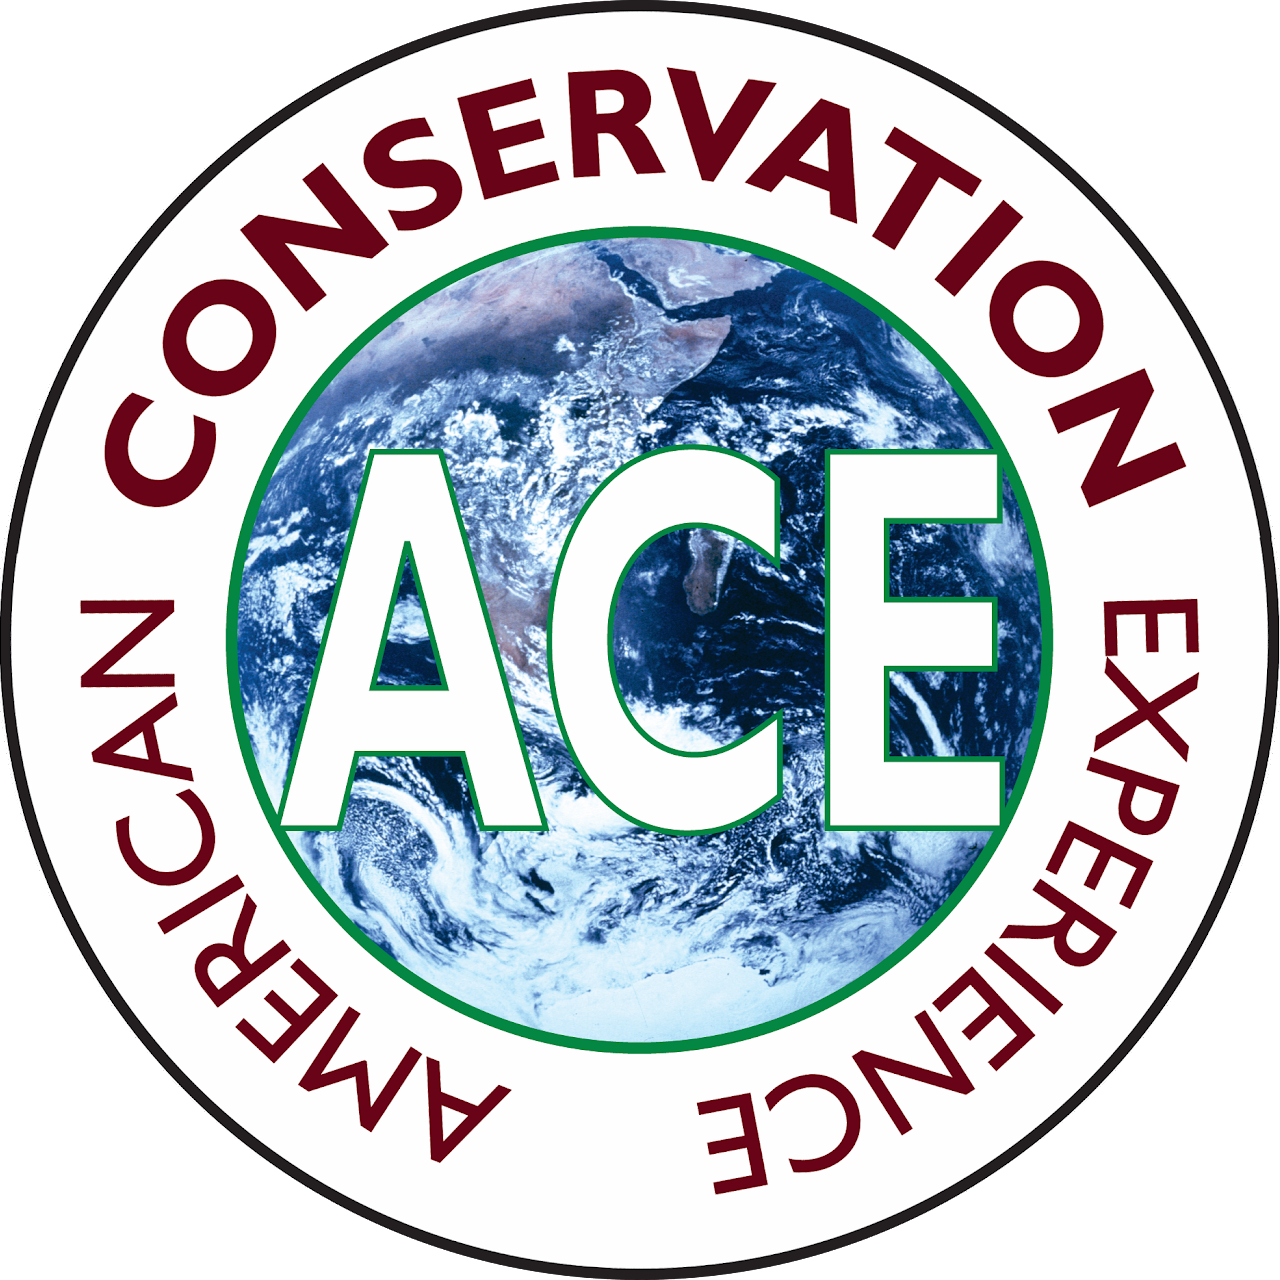 Eastern Conservation Crew Member